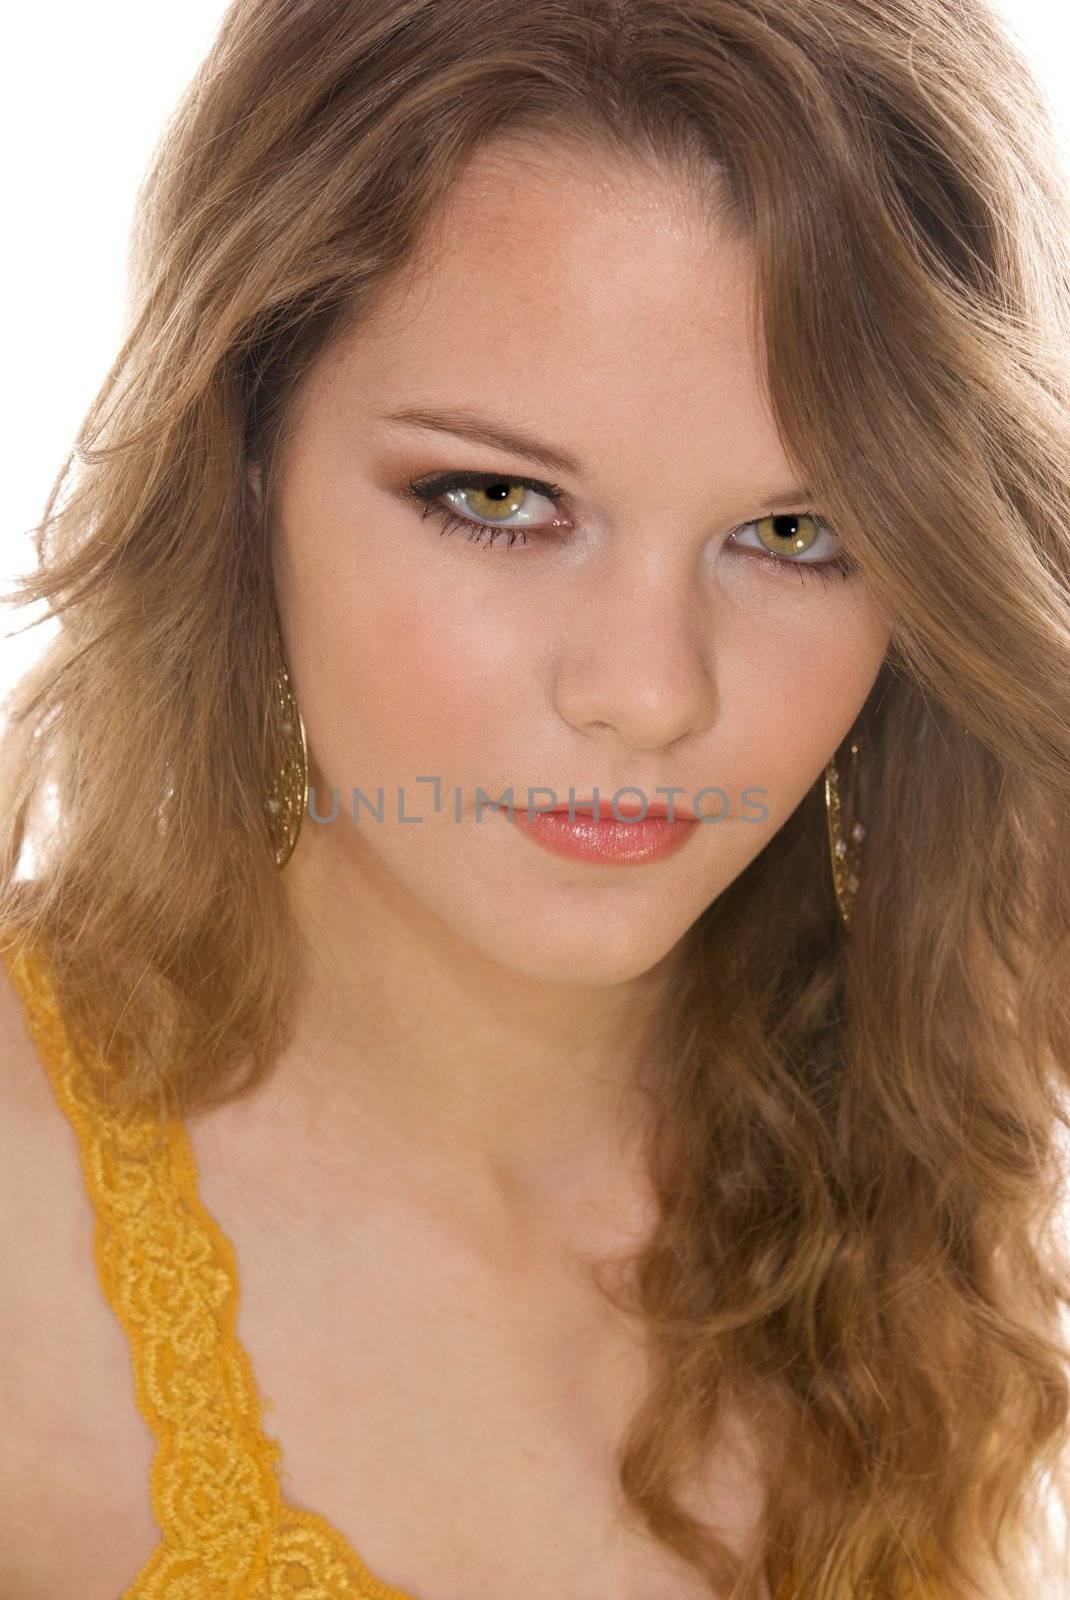 Headshot of Beautiful Teenager by pixelsnap